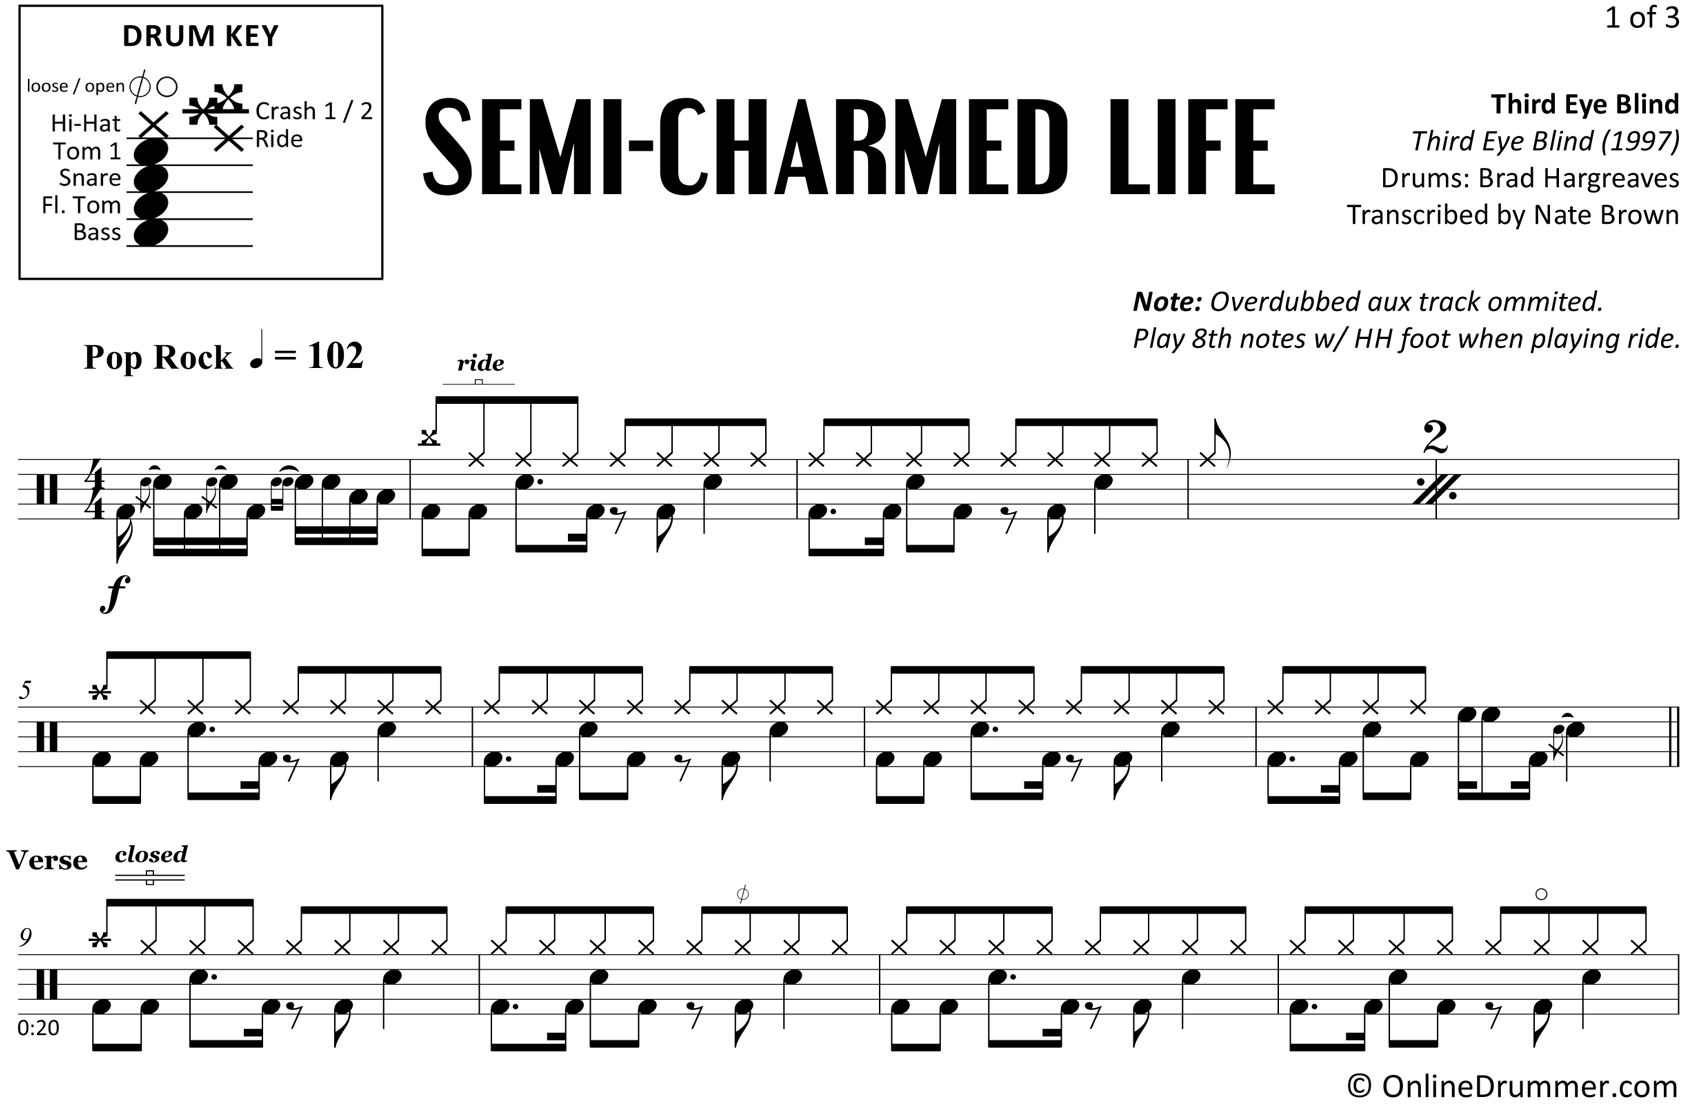 Semi-Charmed Life - Third Eye Blind - Drum Sheet Music